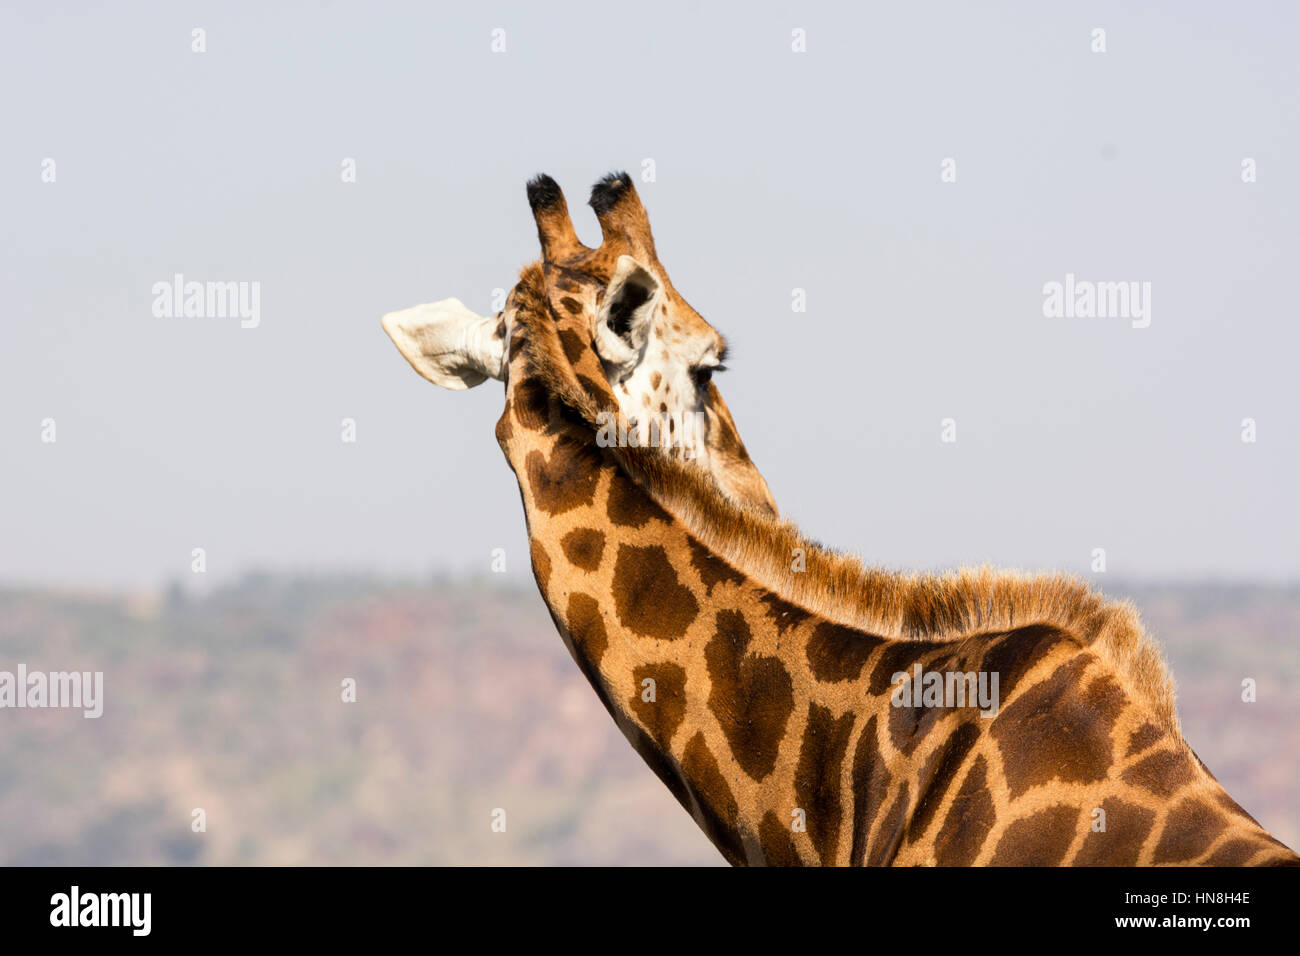 Rear view of the neck and mane of a Rothschild Giraffe, Giraffe camelopardalis rothchild, Nakuru National Park, Kenya, Africa, Giraffe neck and mane. Stock Photo